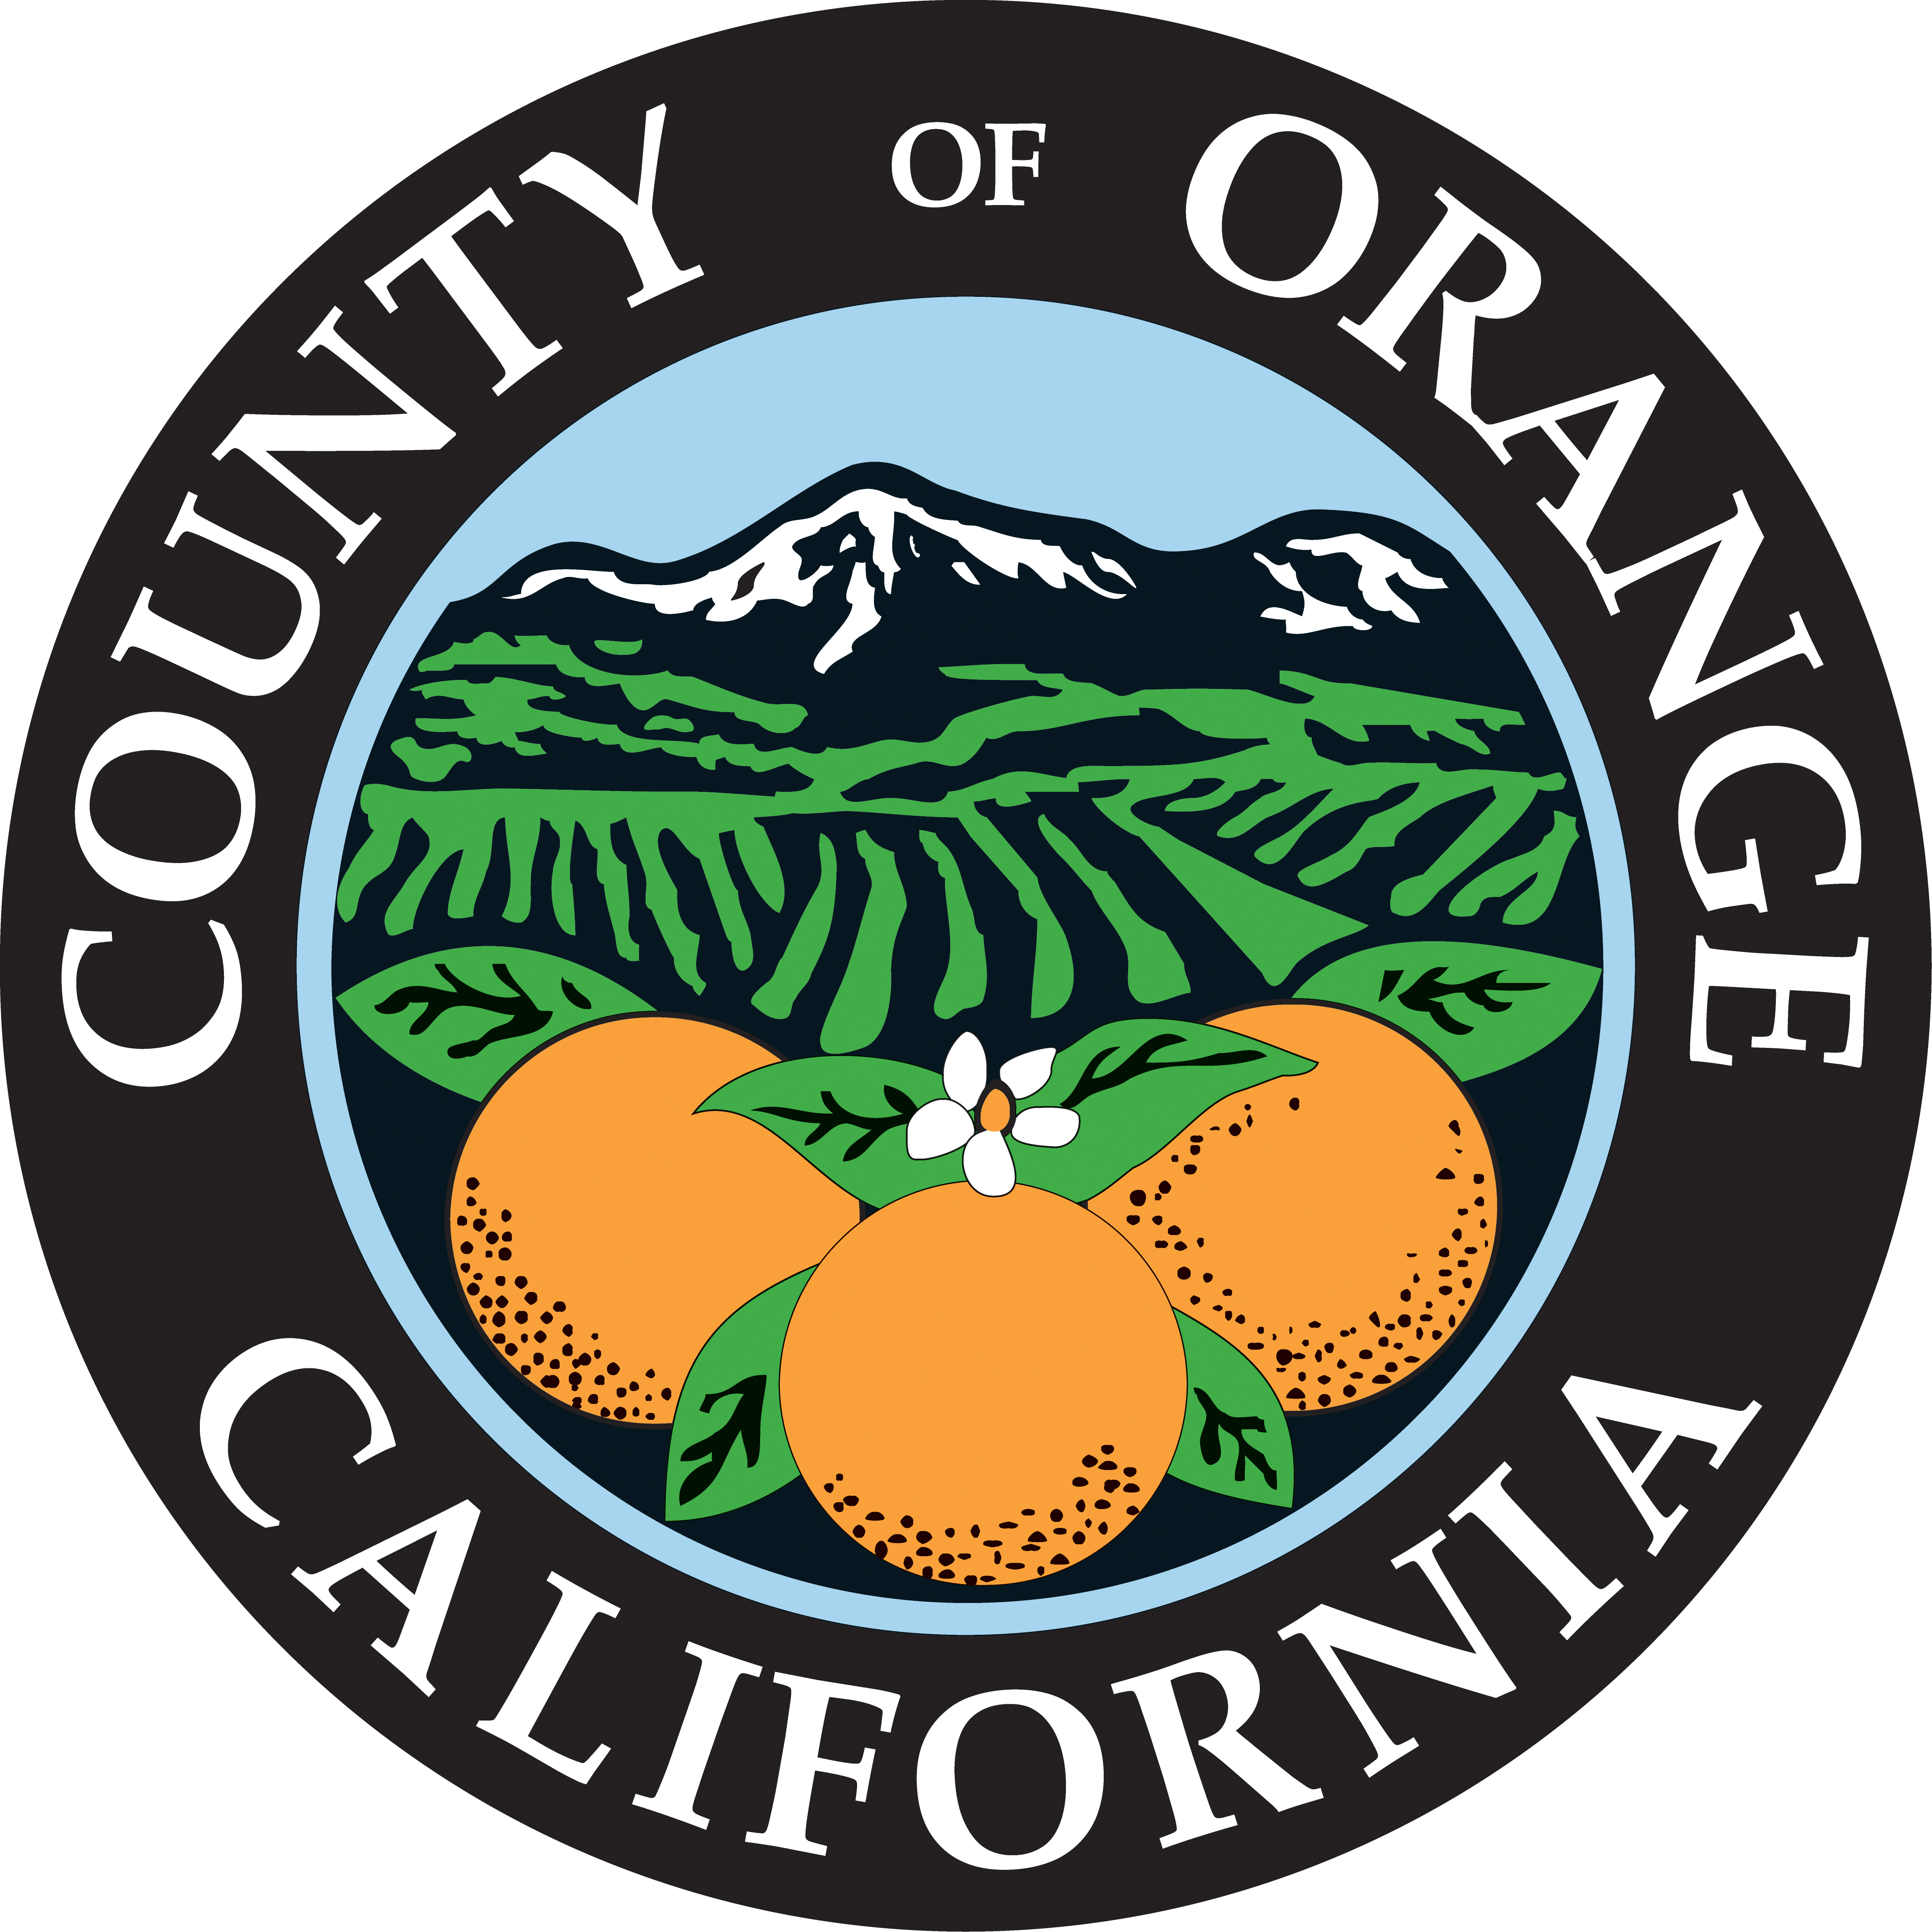 County of Orange logo